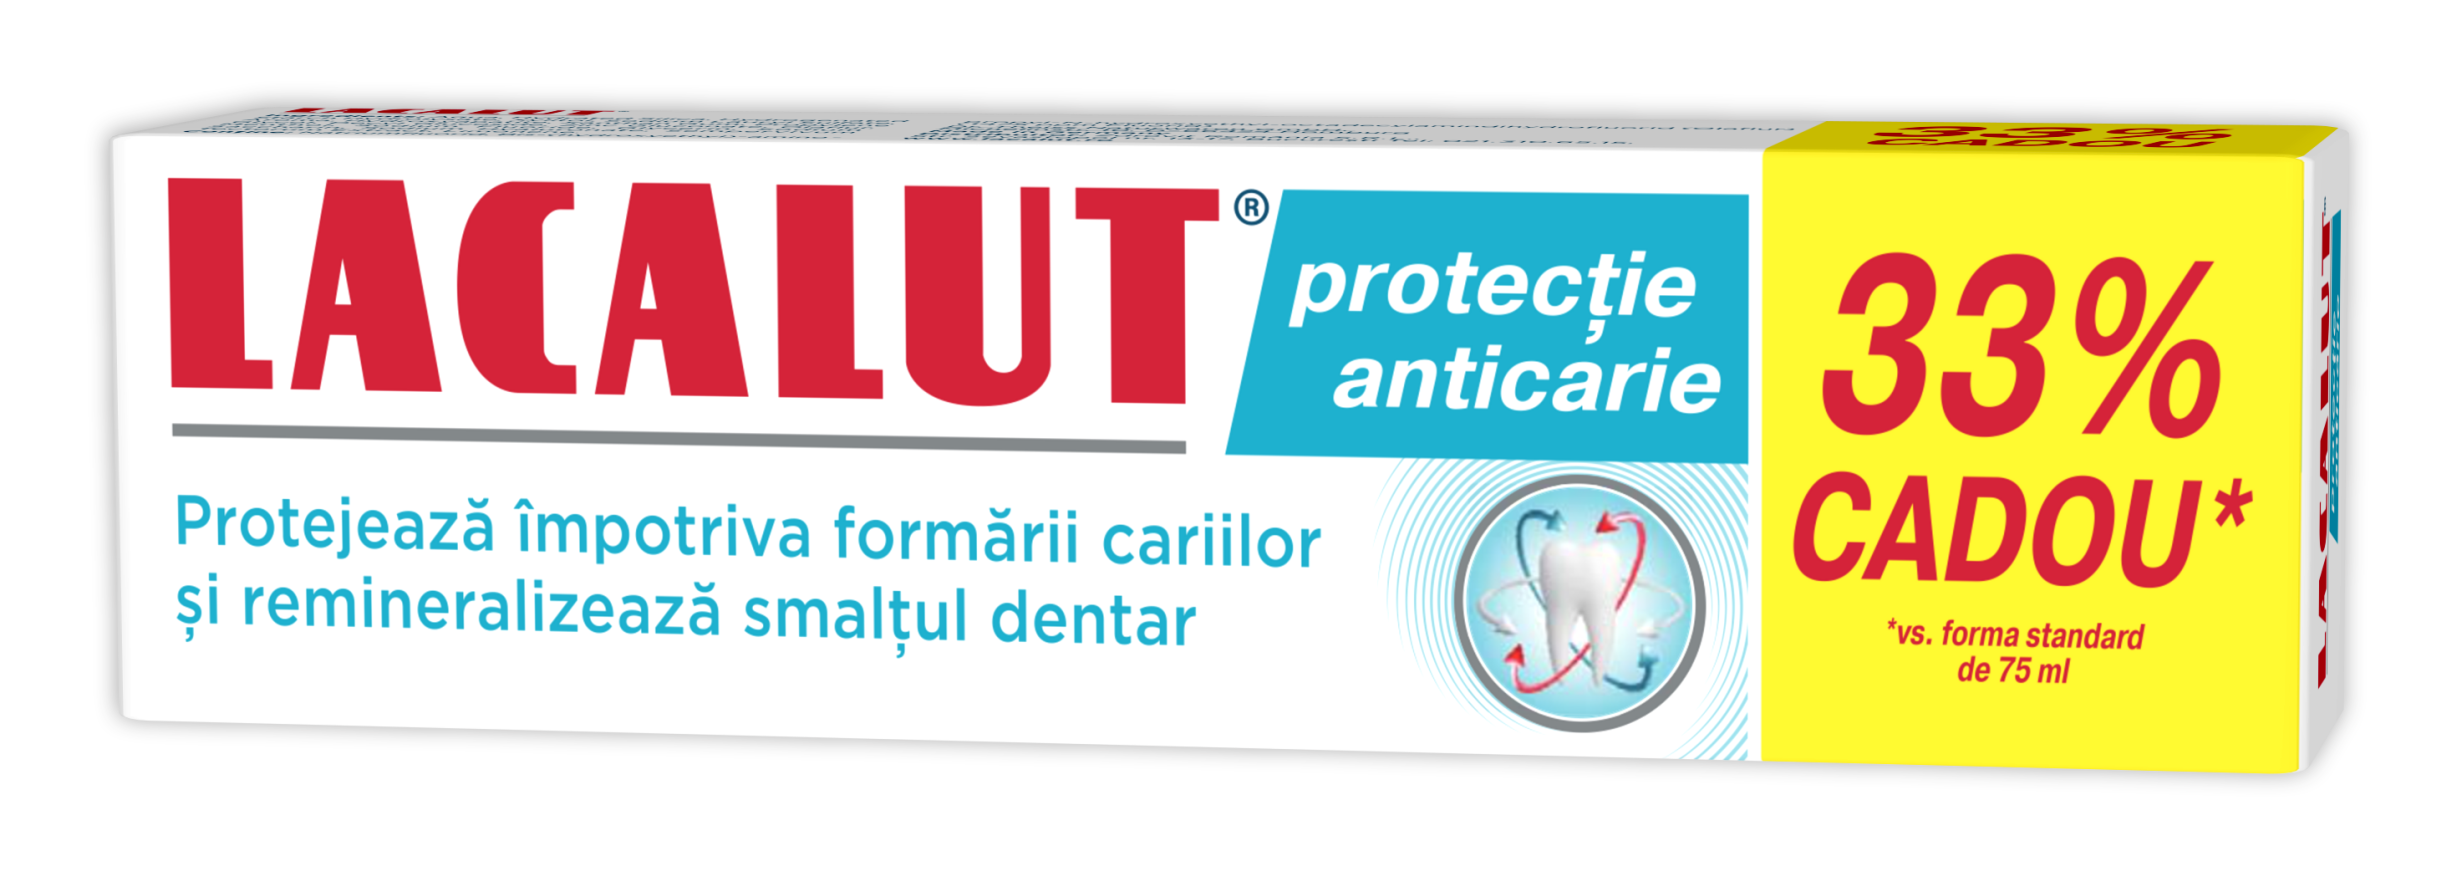 Lacalut Protectie Anticarie Pasta Dinti 75ml+33%cadou